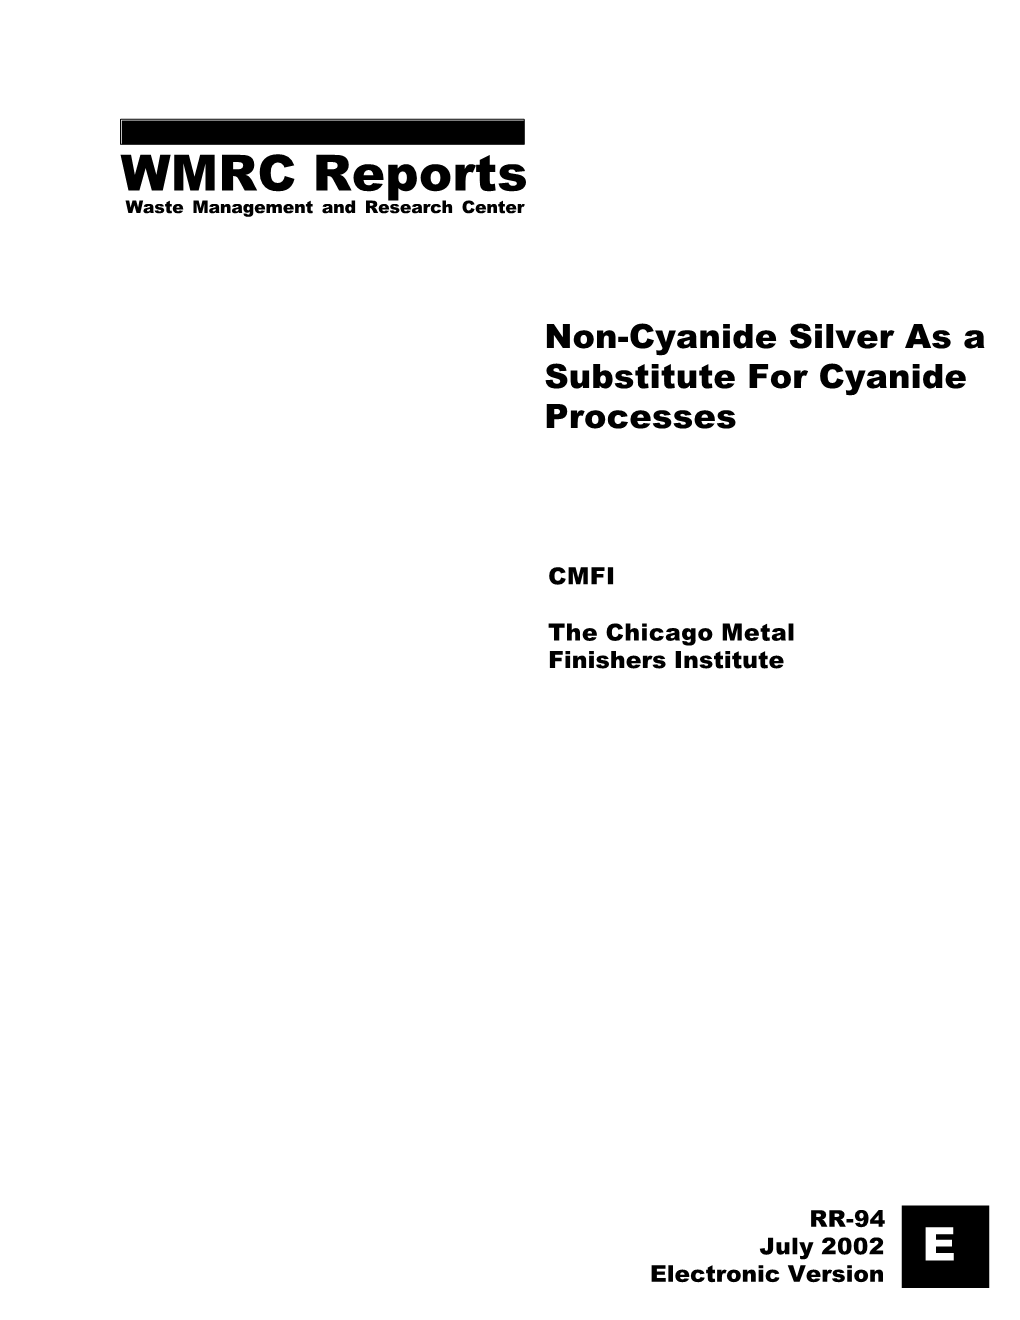 CMFI Final Report on Silver